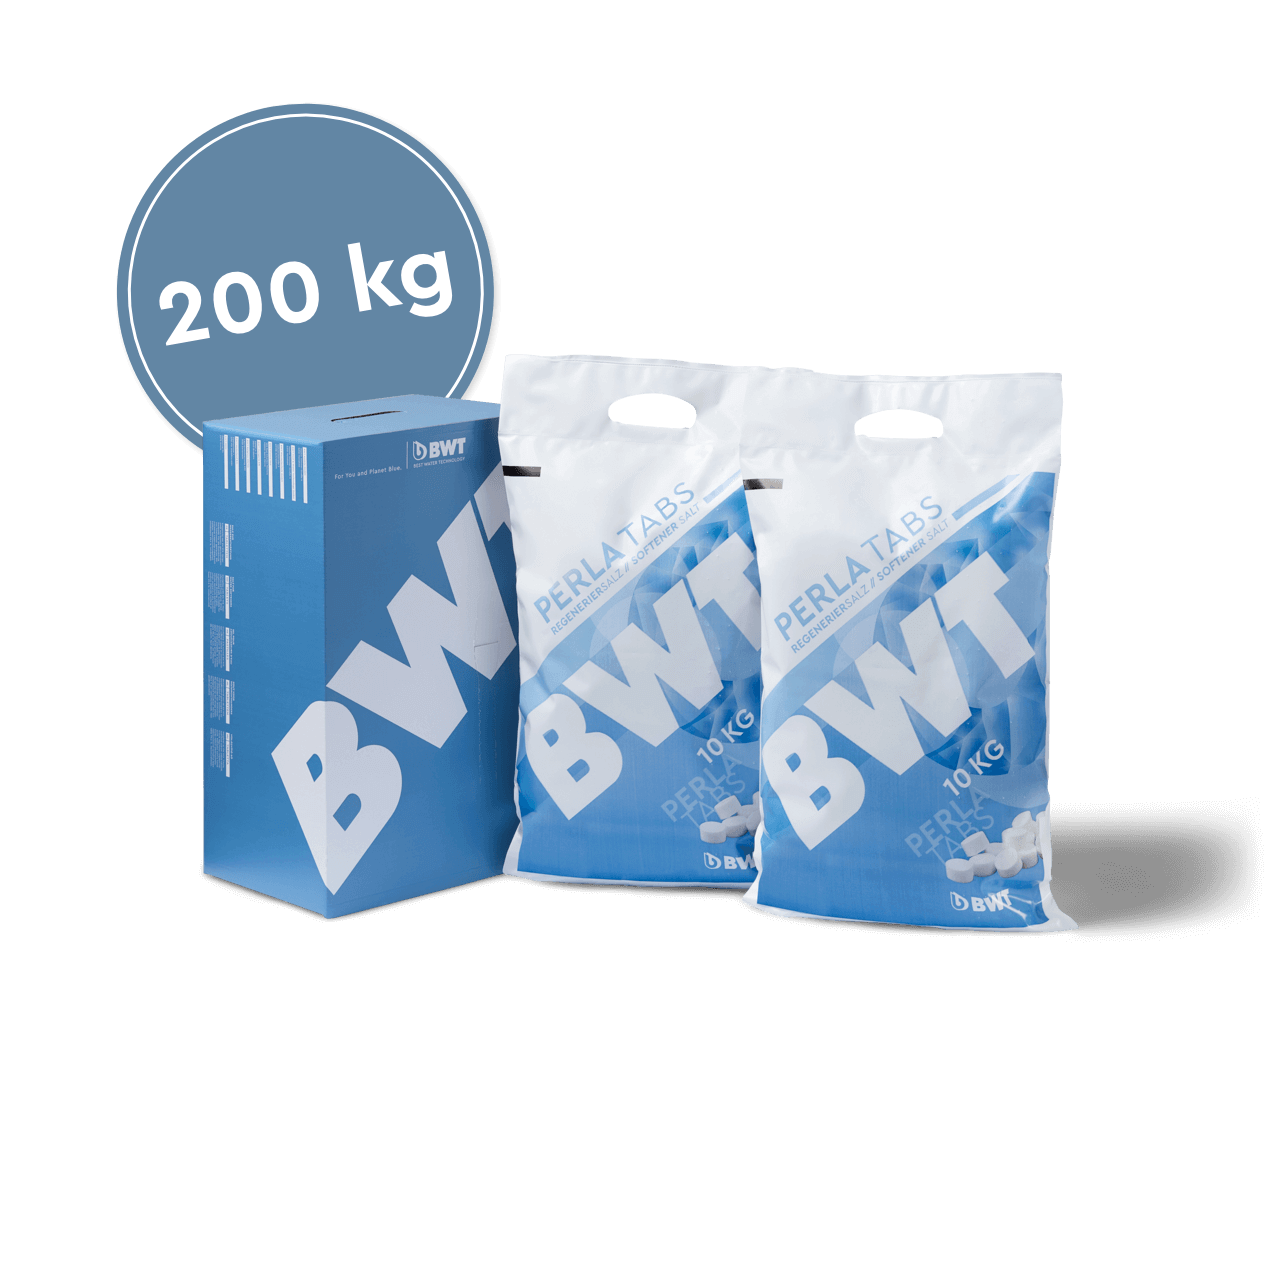 BWT tyynysuola Perla Tabs 8 x 25 kg + Sanitabs 8 kg, laadukas elvytyssuola  vedenpehmentimiin